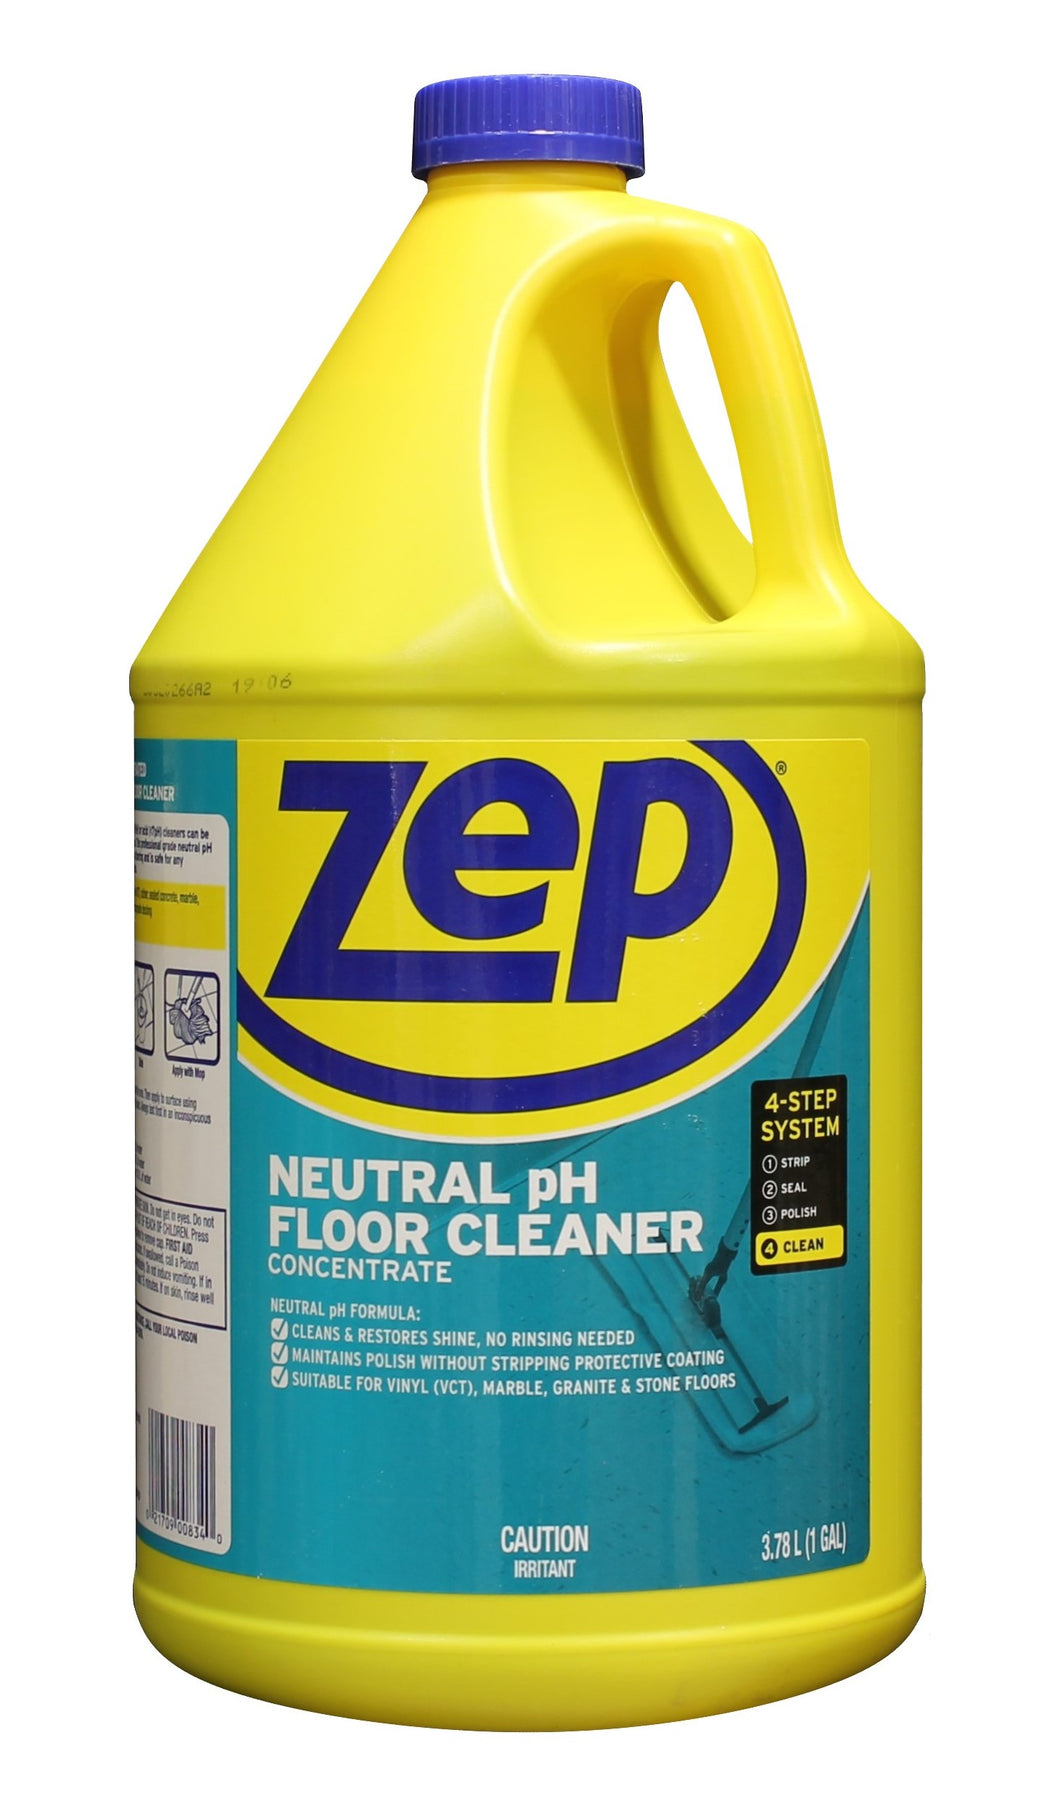 Zep Multi-Surface NEUTAL PH Floor Cleaner (1 Gallon)